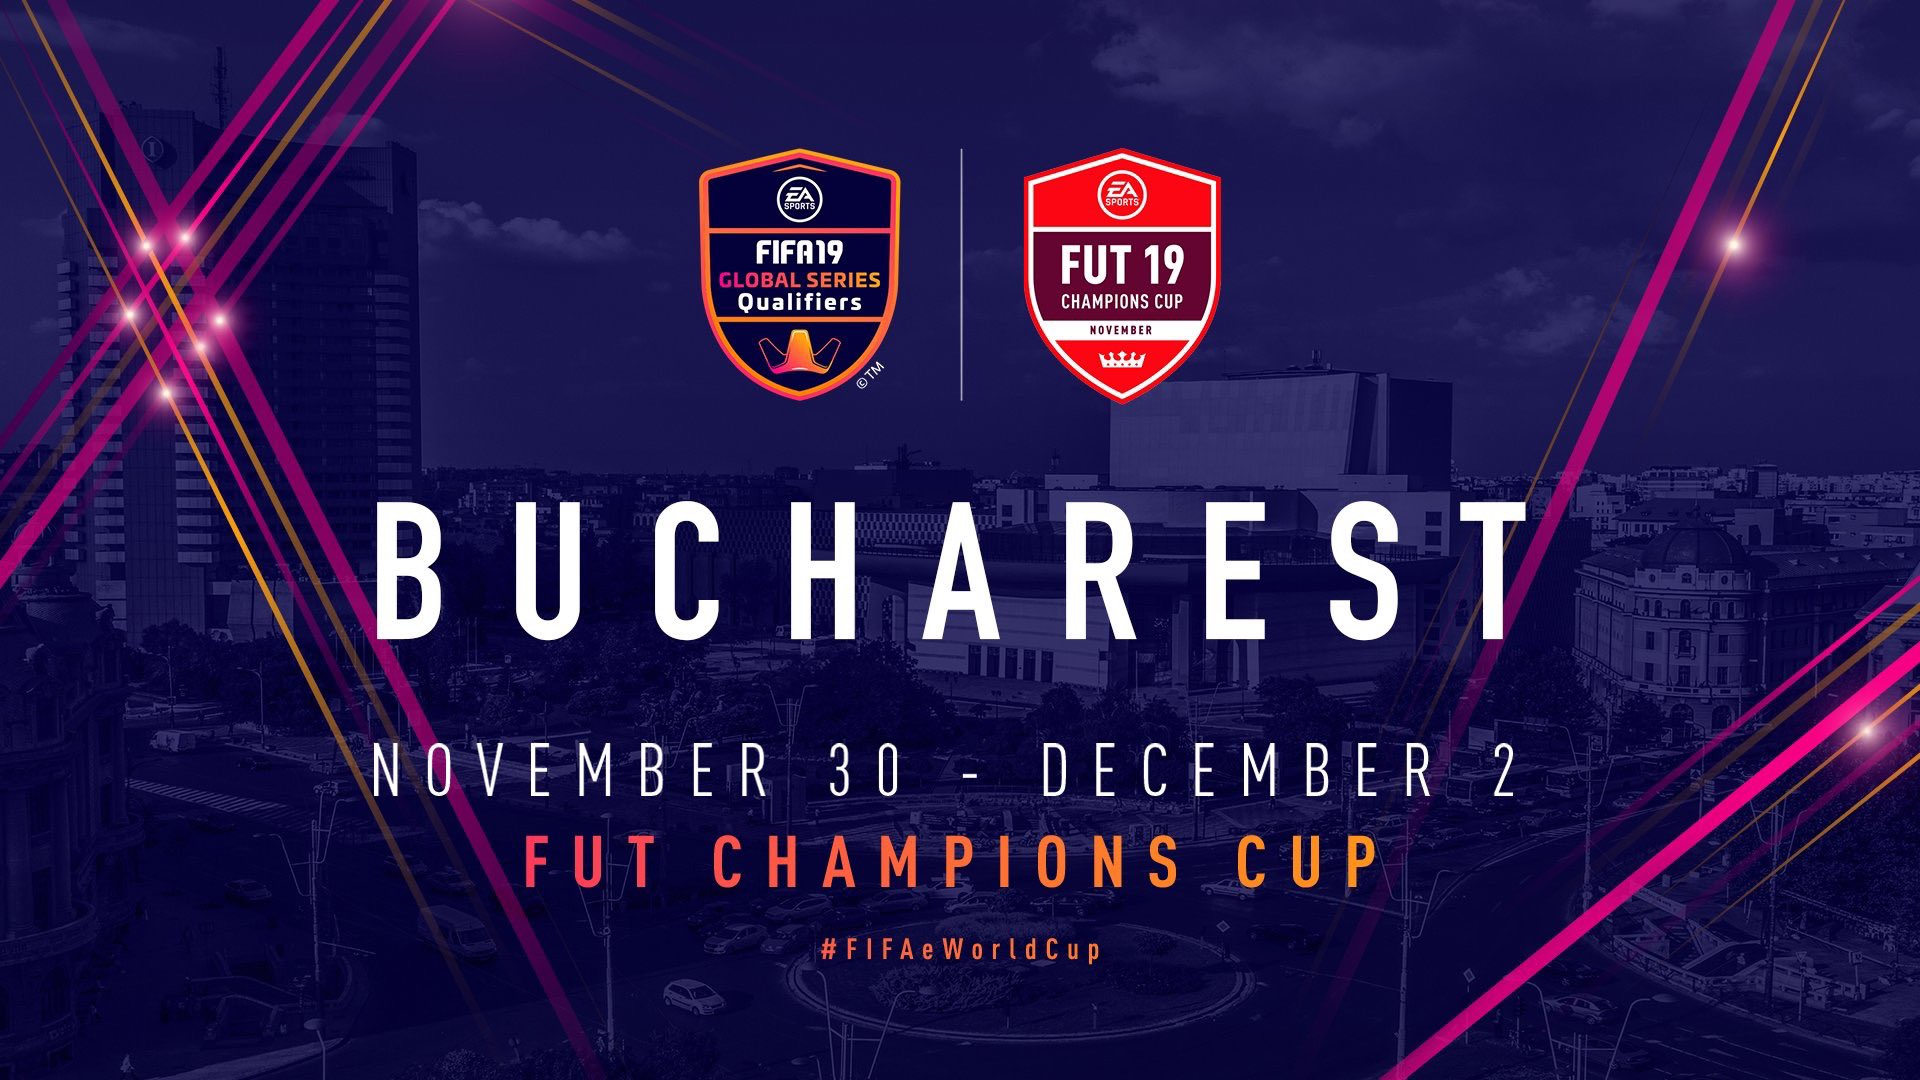 FUT Champions Cup in Bucharest 